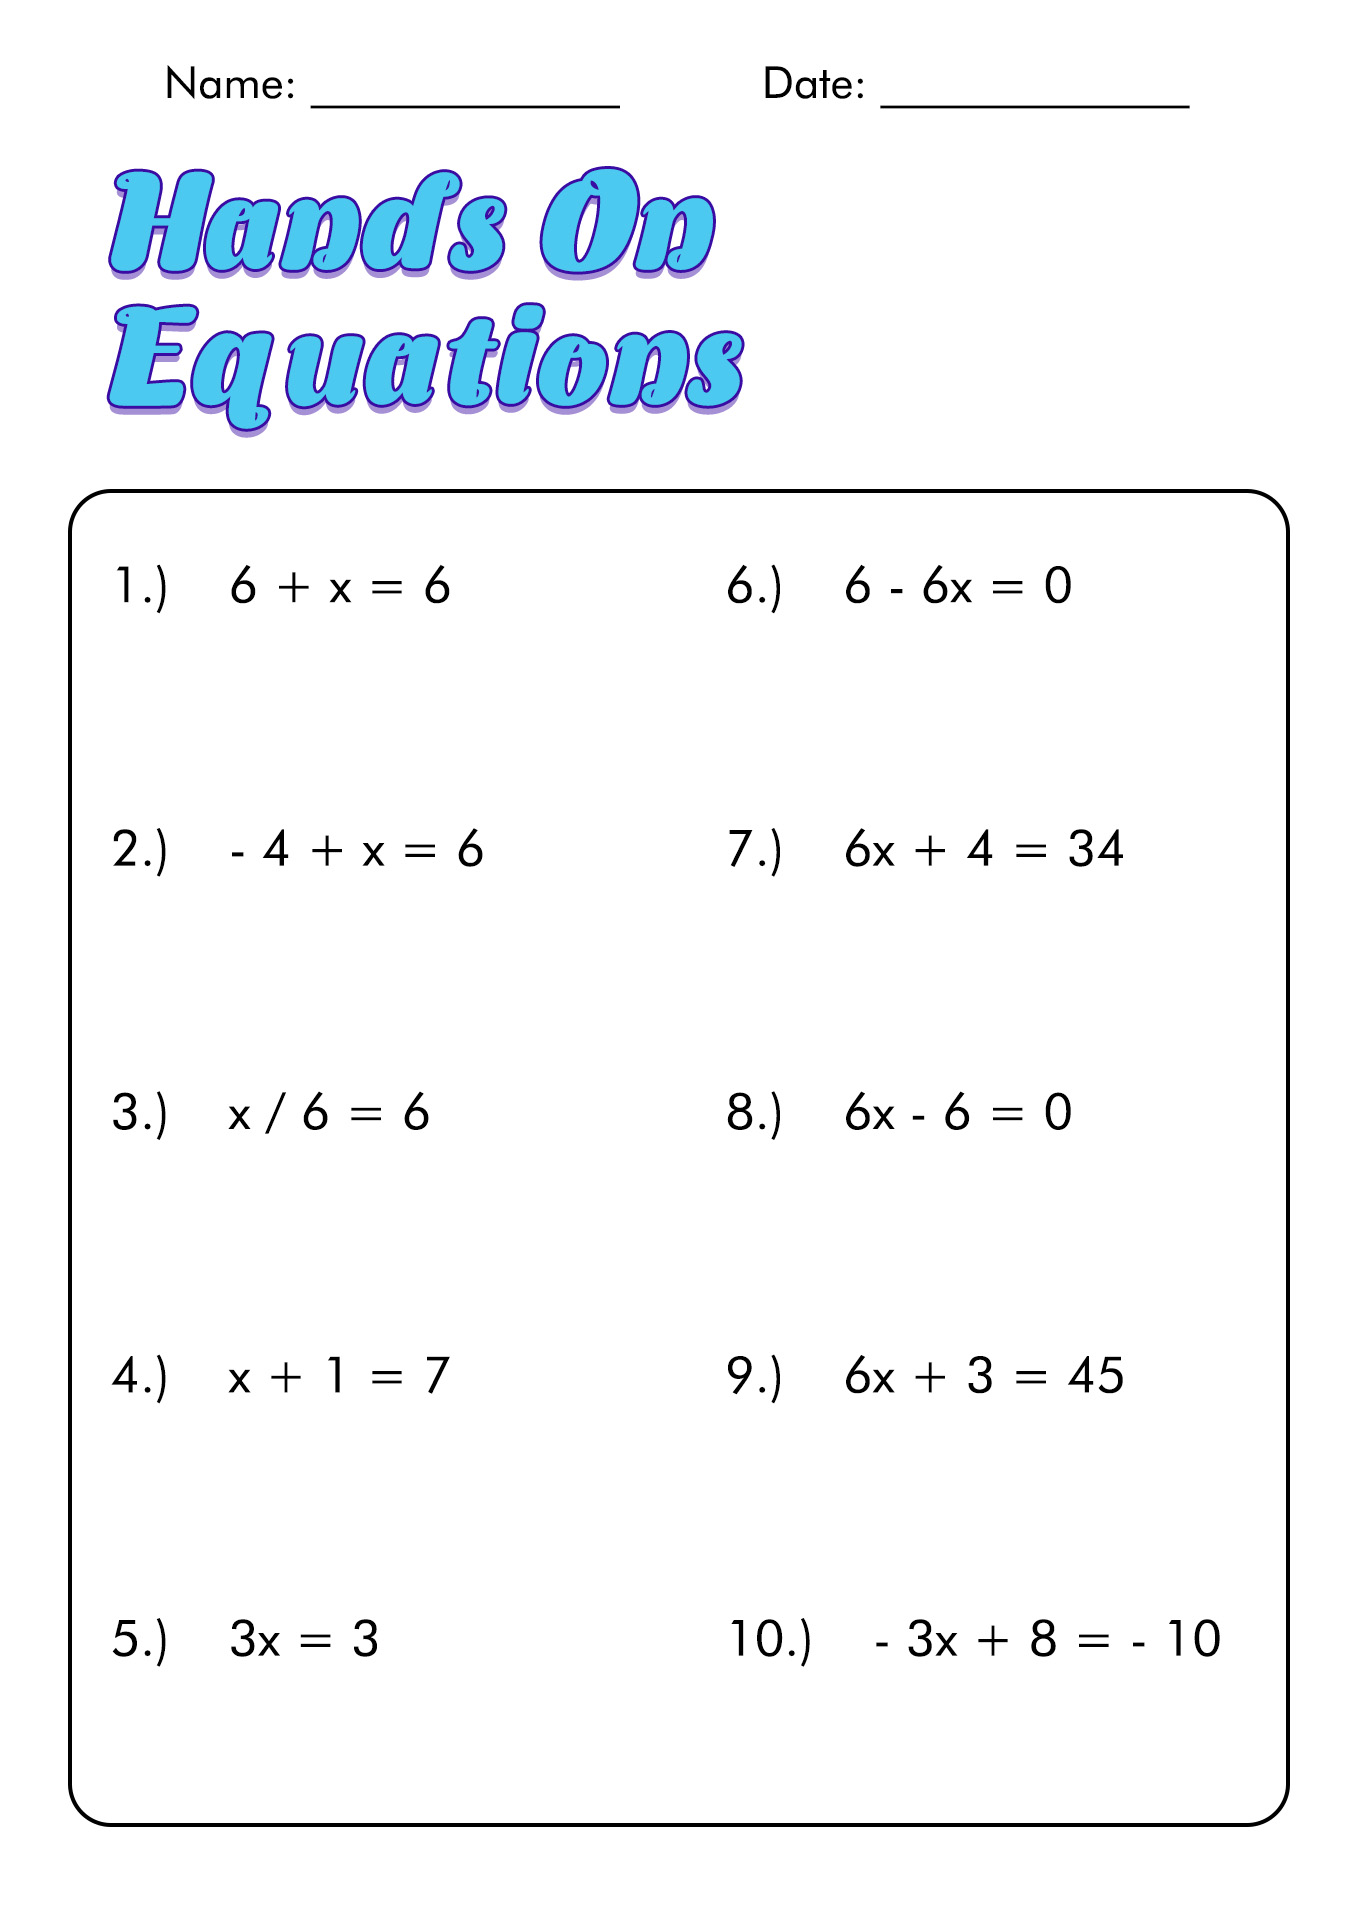 Hands-On Equations Lesson 1 Worksheet Image